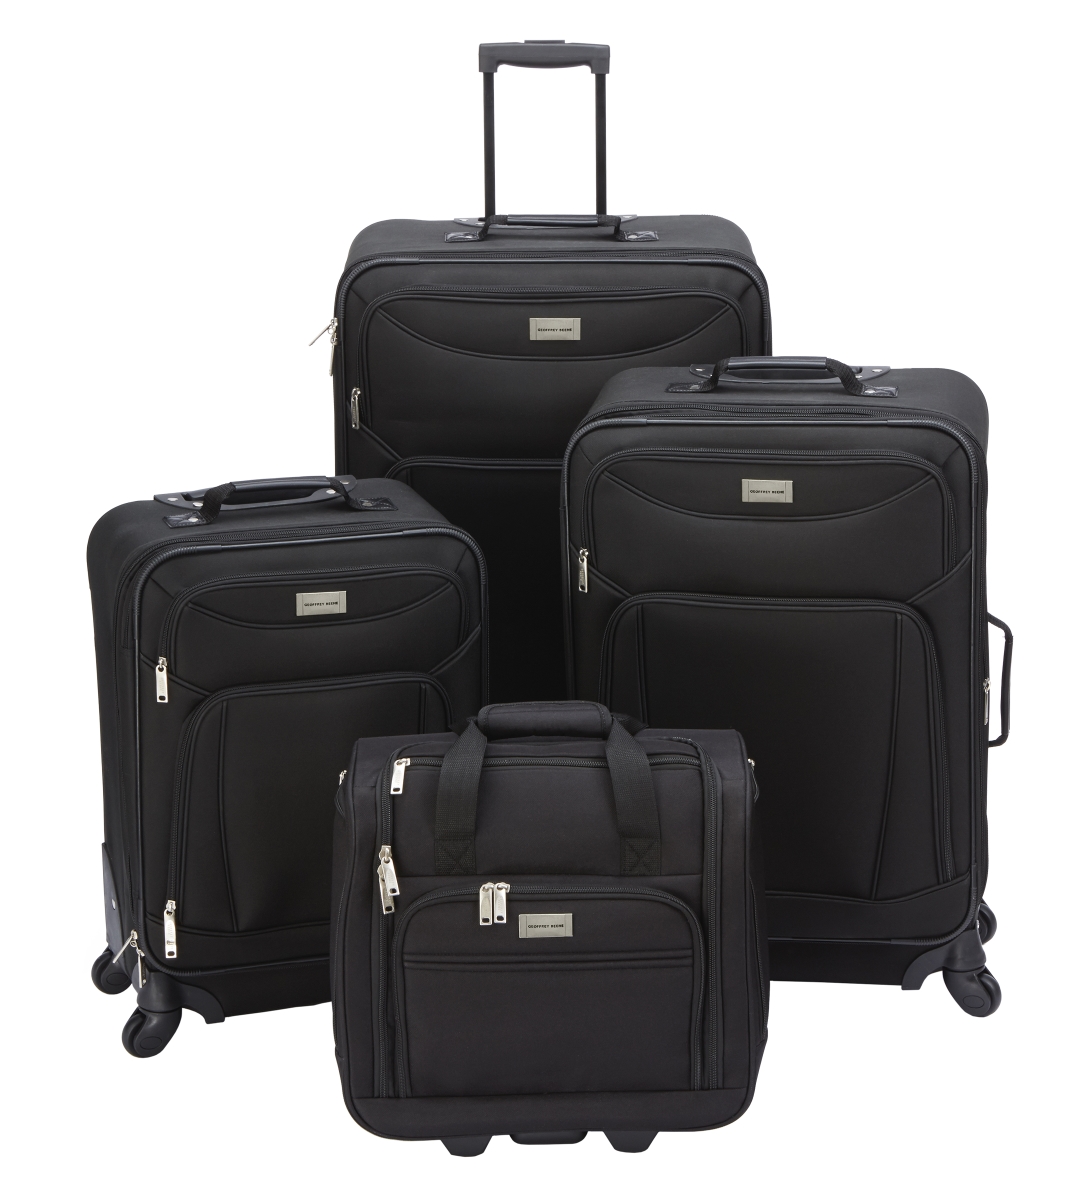 Gb1390-4 Hempstead Travel Luggage Set - Black, 4 Piece